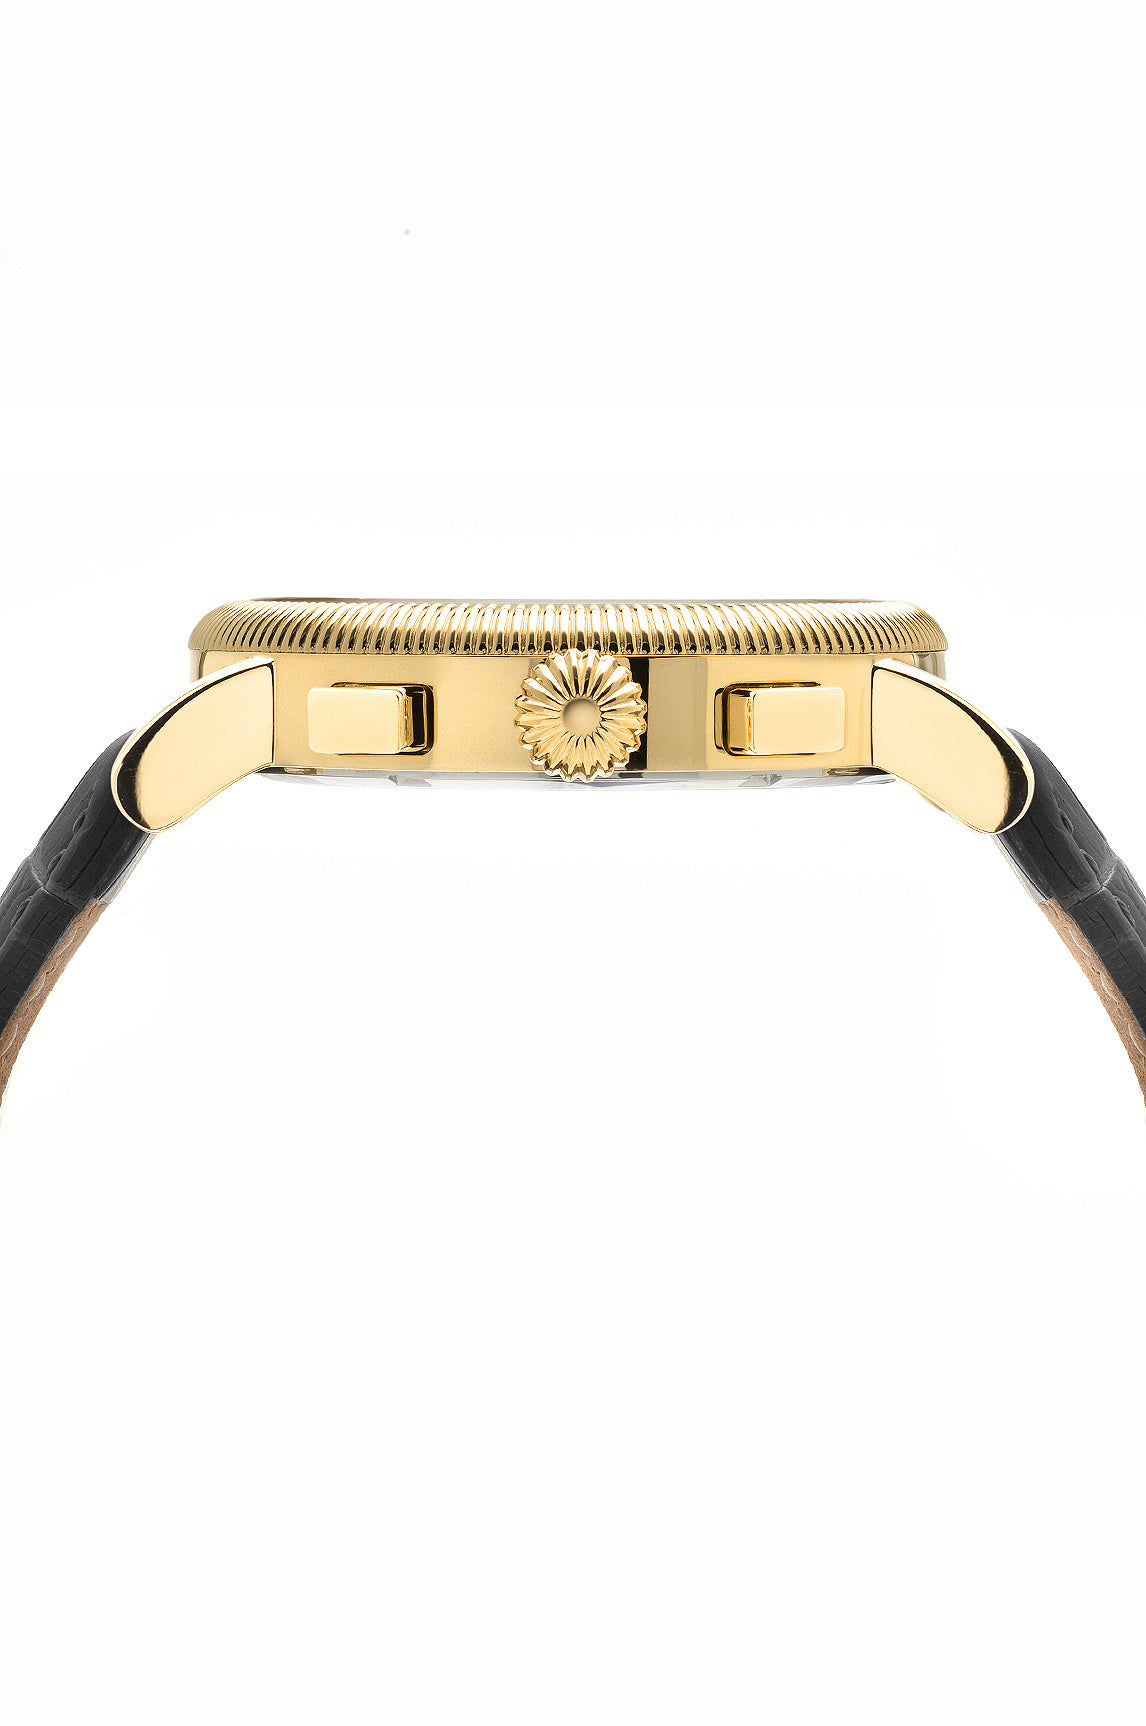 Porsamo Bleu Phileas Luxury Chronograph Men's Watch, Genuine Leather Band Gold, Black 472BPHL